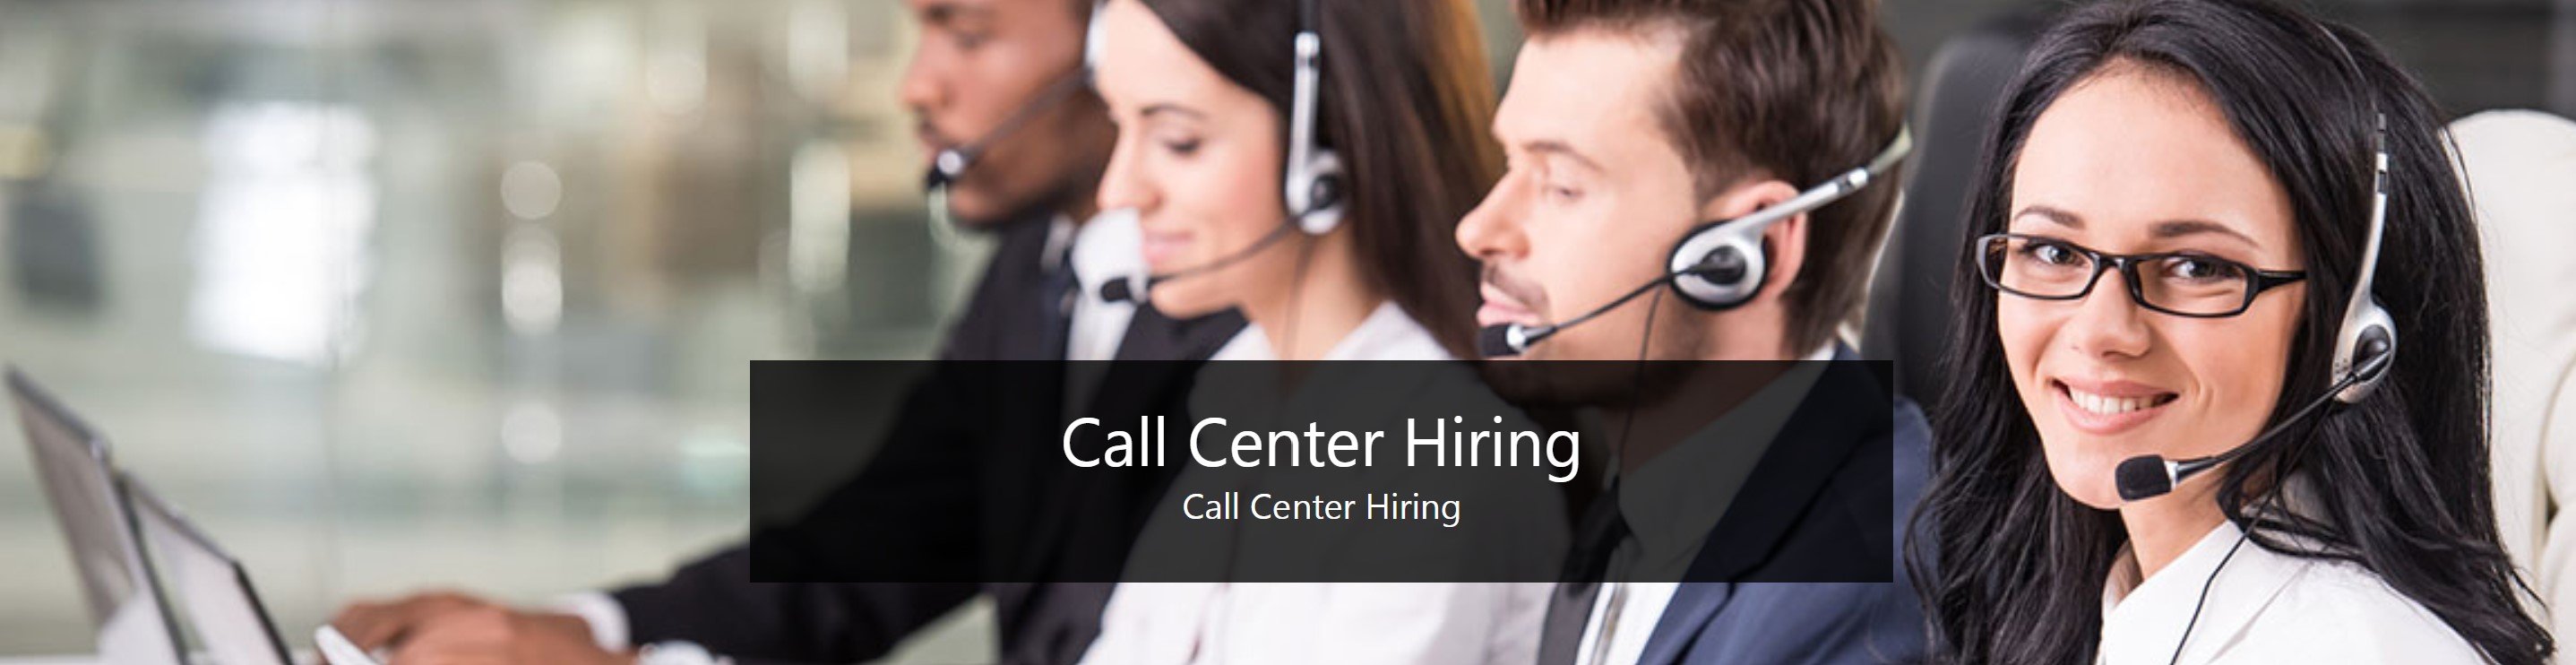 Call Center Hiring